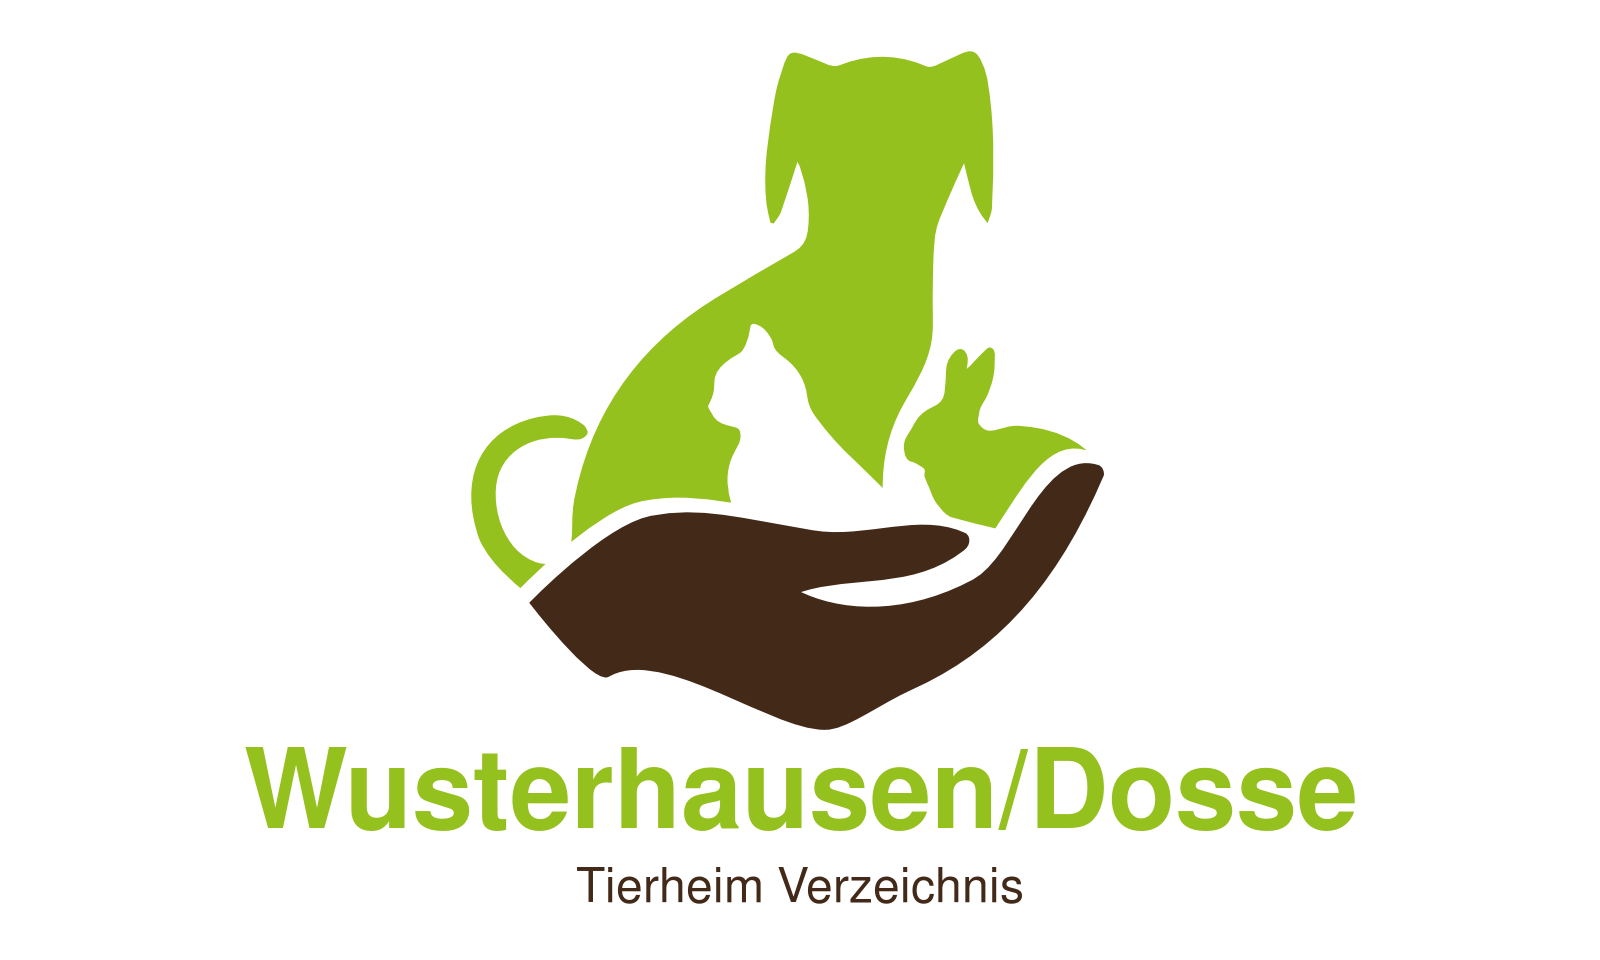 Tierheim Wusterhausen/Dosse